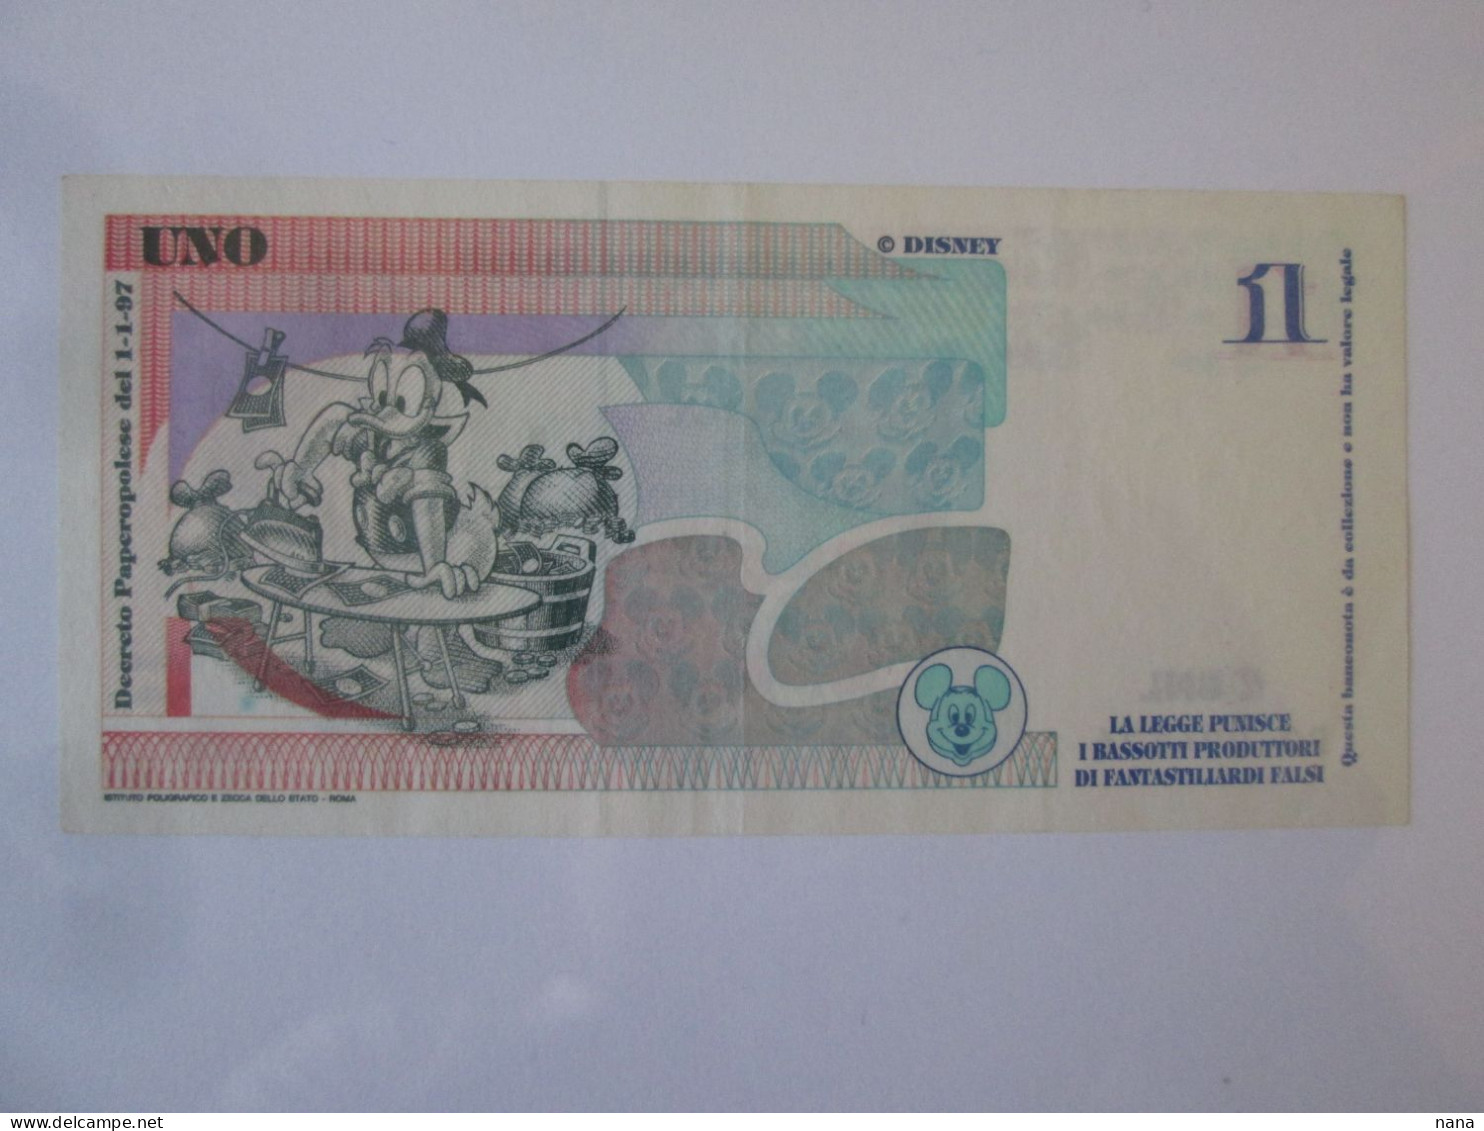 Rare! Italy 1 Billion Disney Paper Bank-Donald Duck 1997/1 Milliard Banque De Papier Disney-Canard Donald 1997 - [ 9] Colecciones